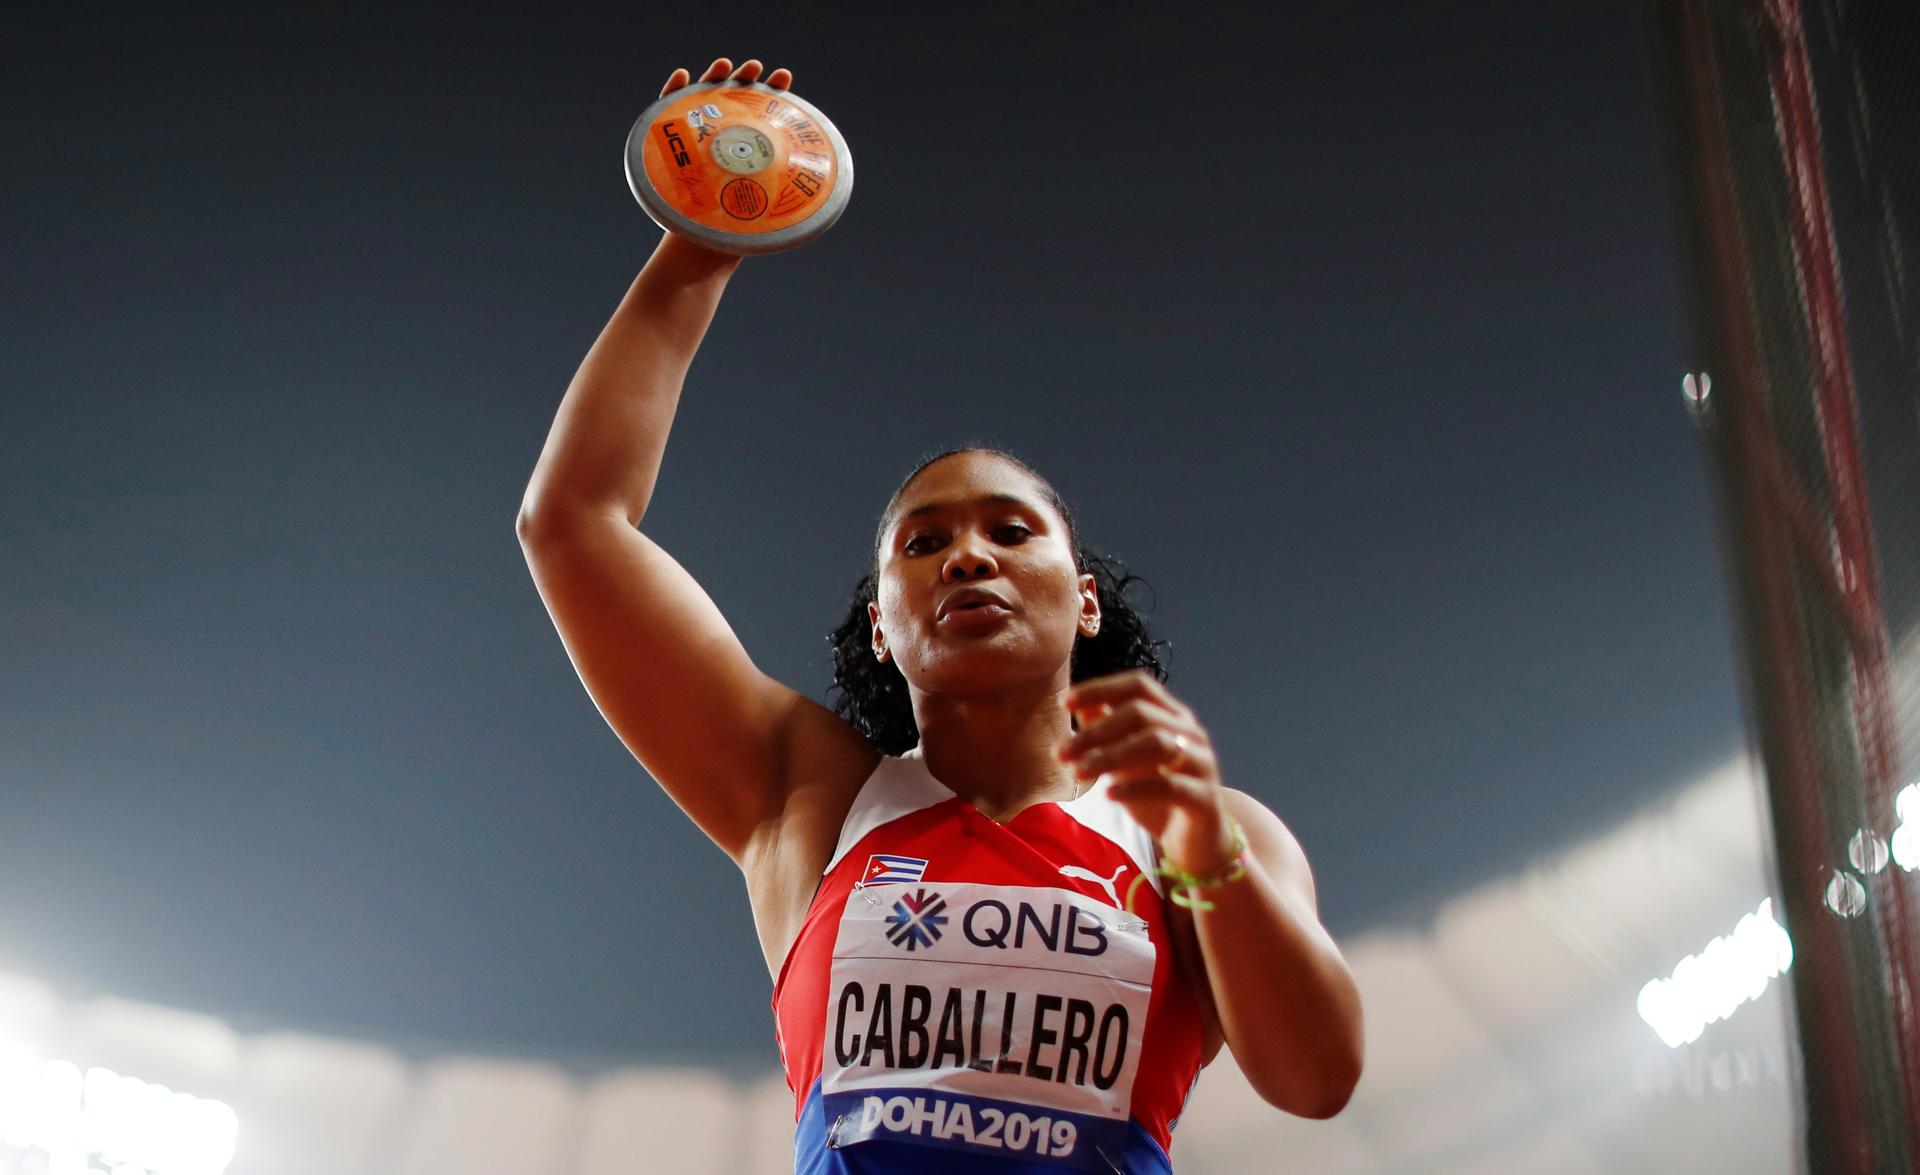 La campeona mundial y medallista olímpica cubana Denia Caballero desertó en Castellón